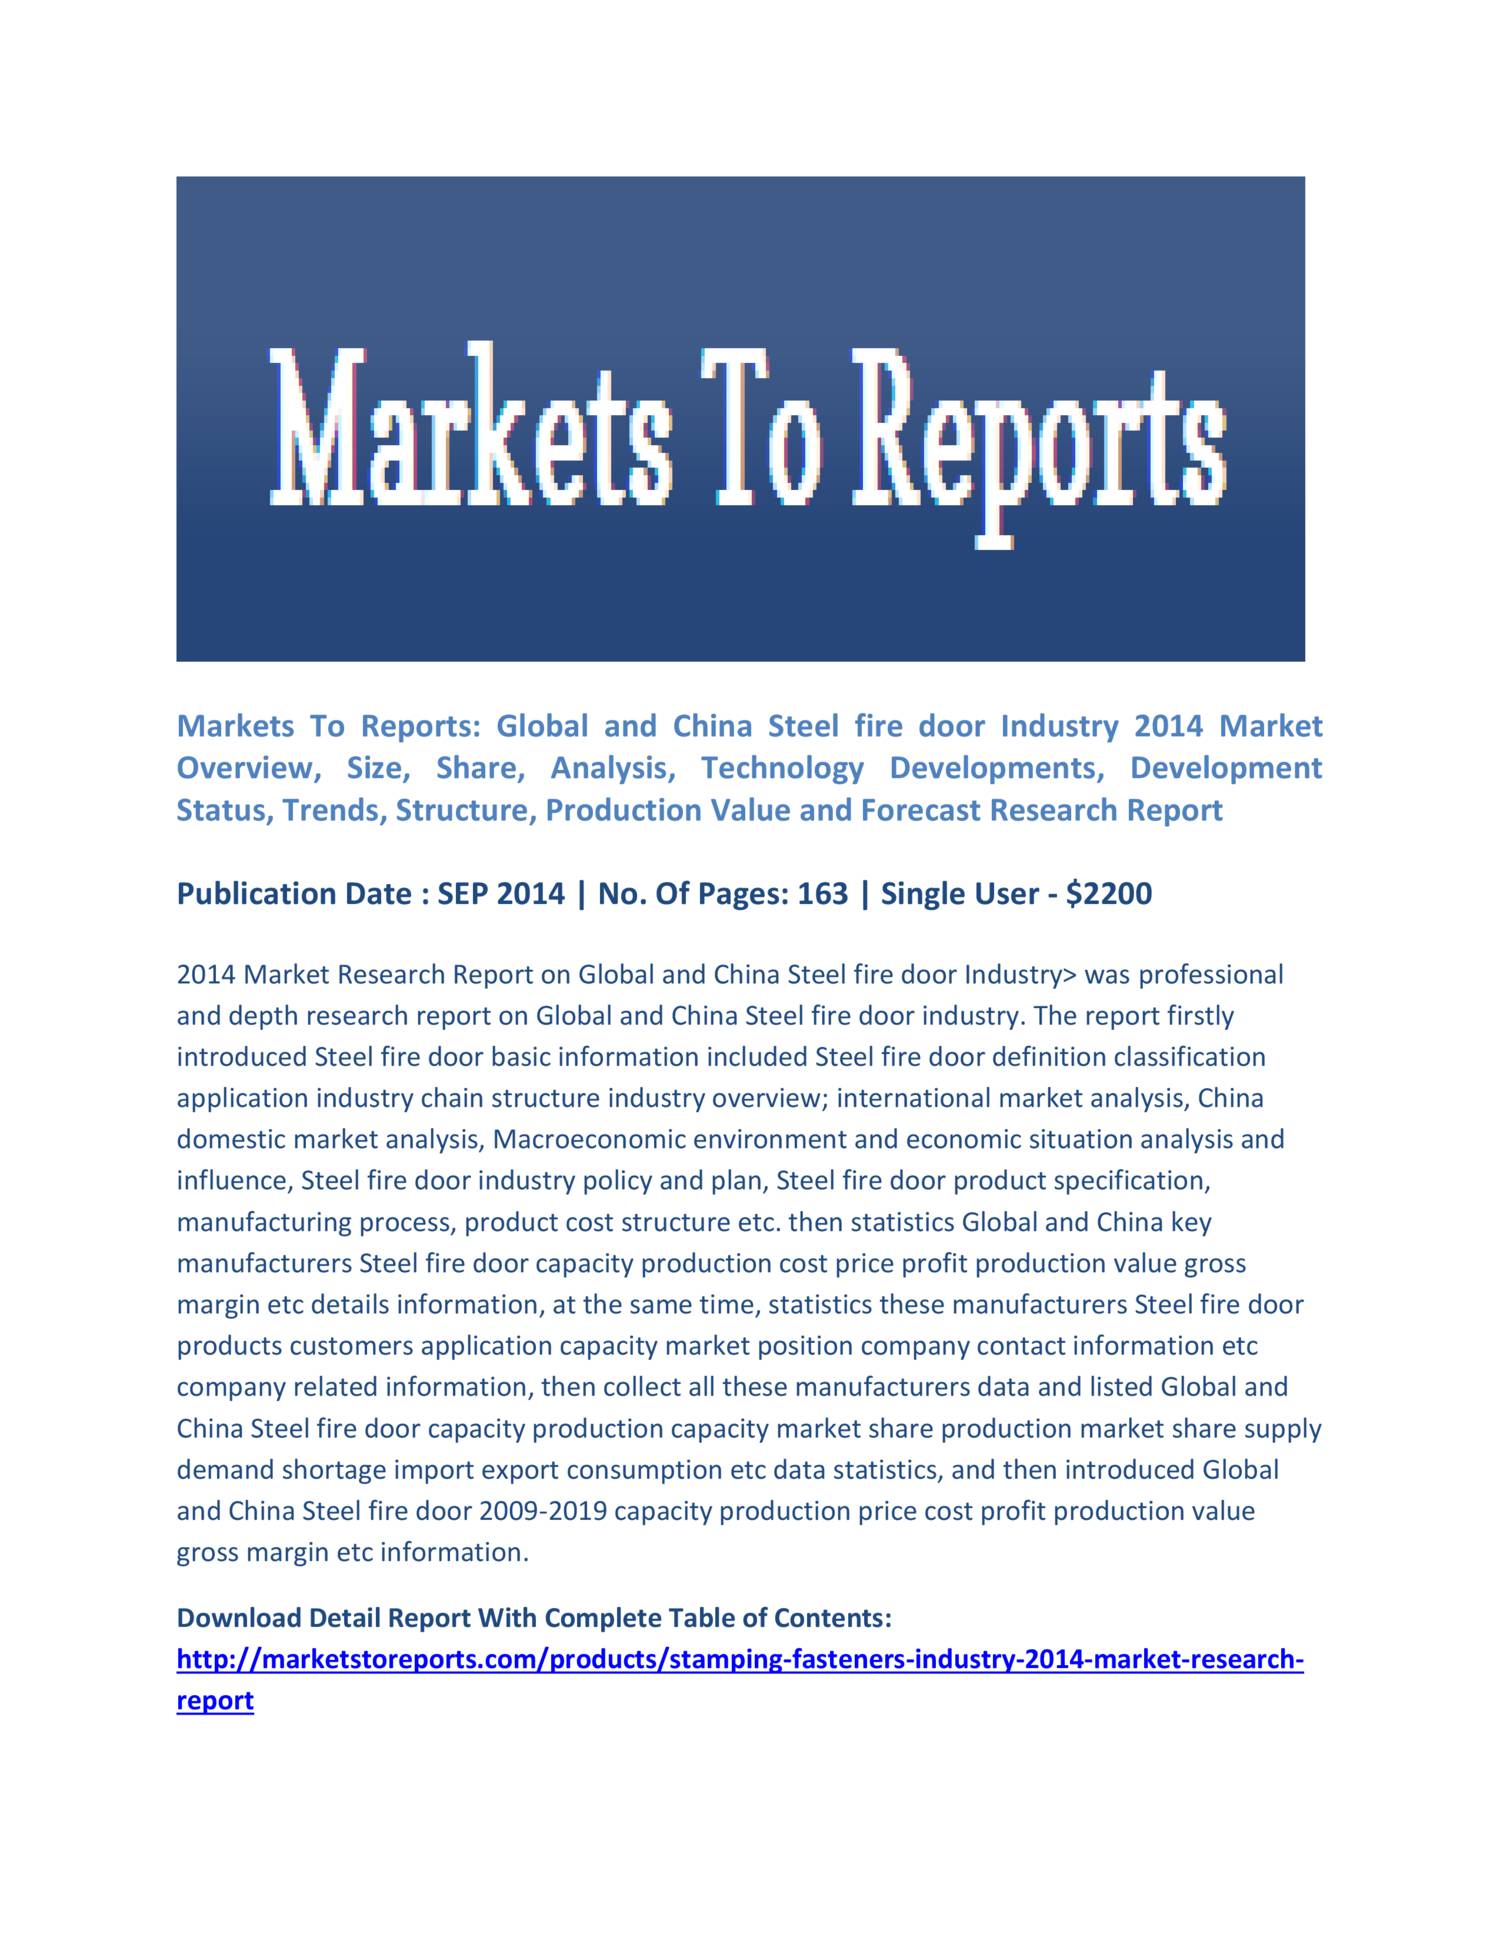 Outdoor Gear Industry 2018 Market Research Report